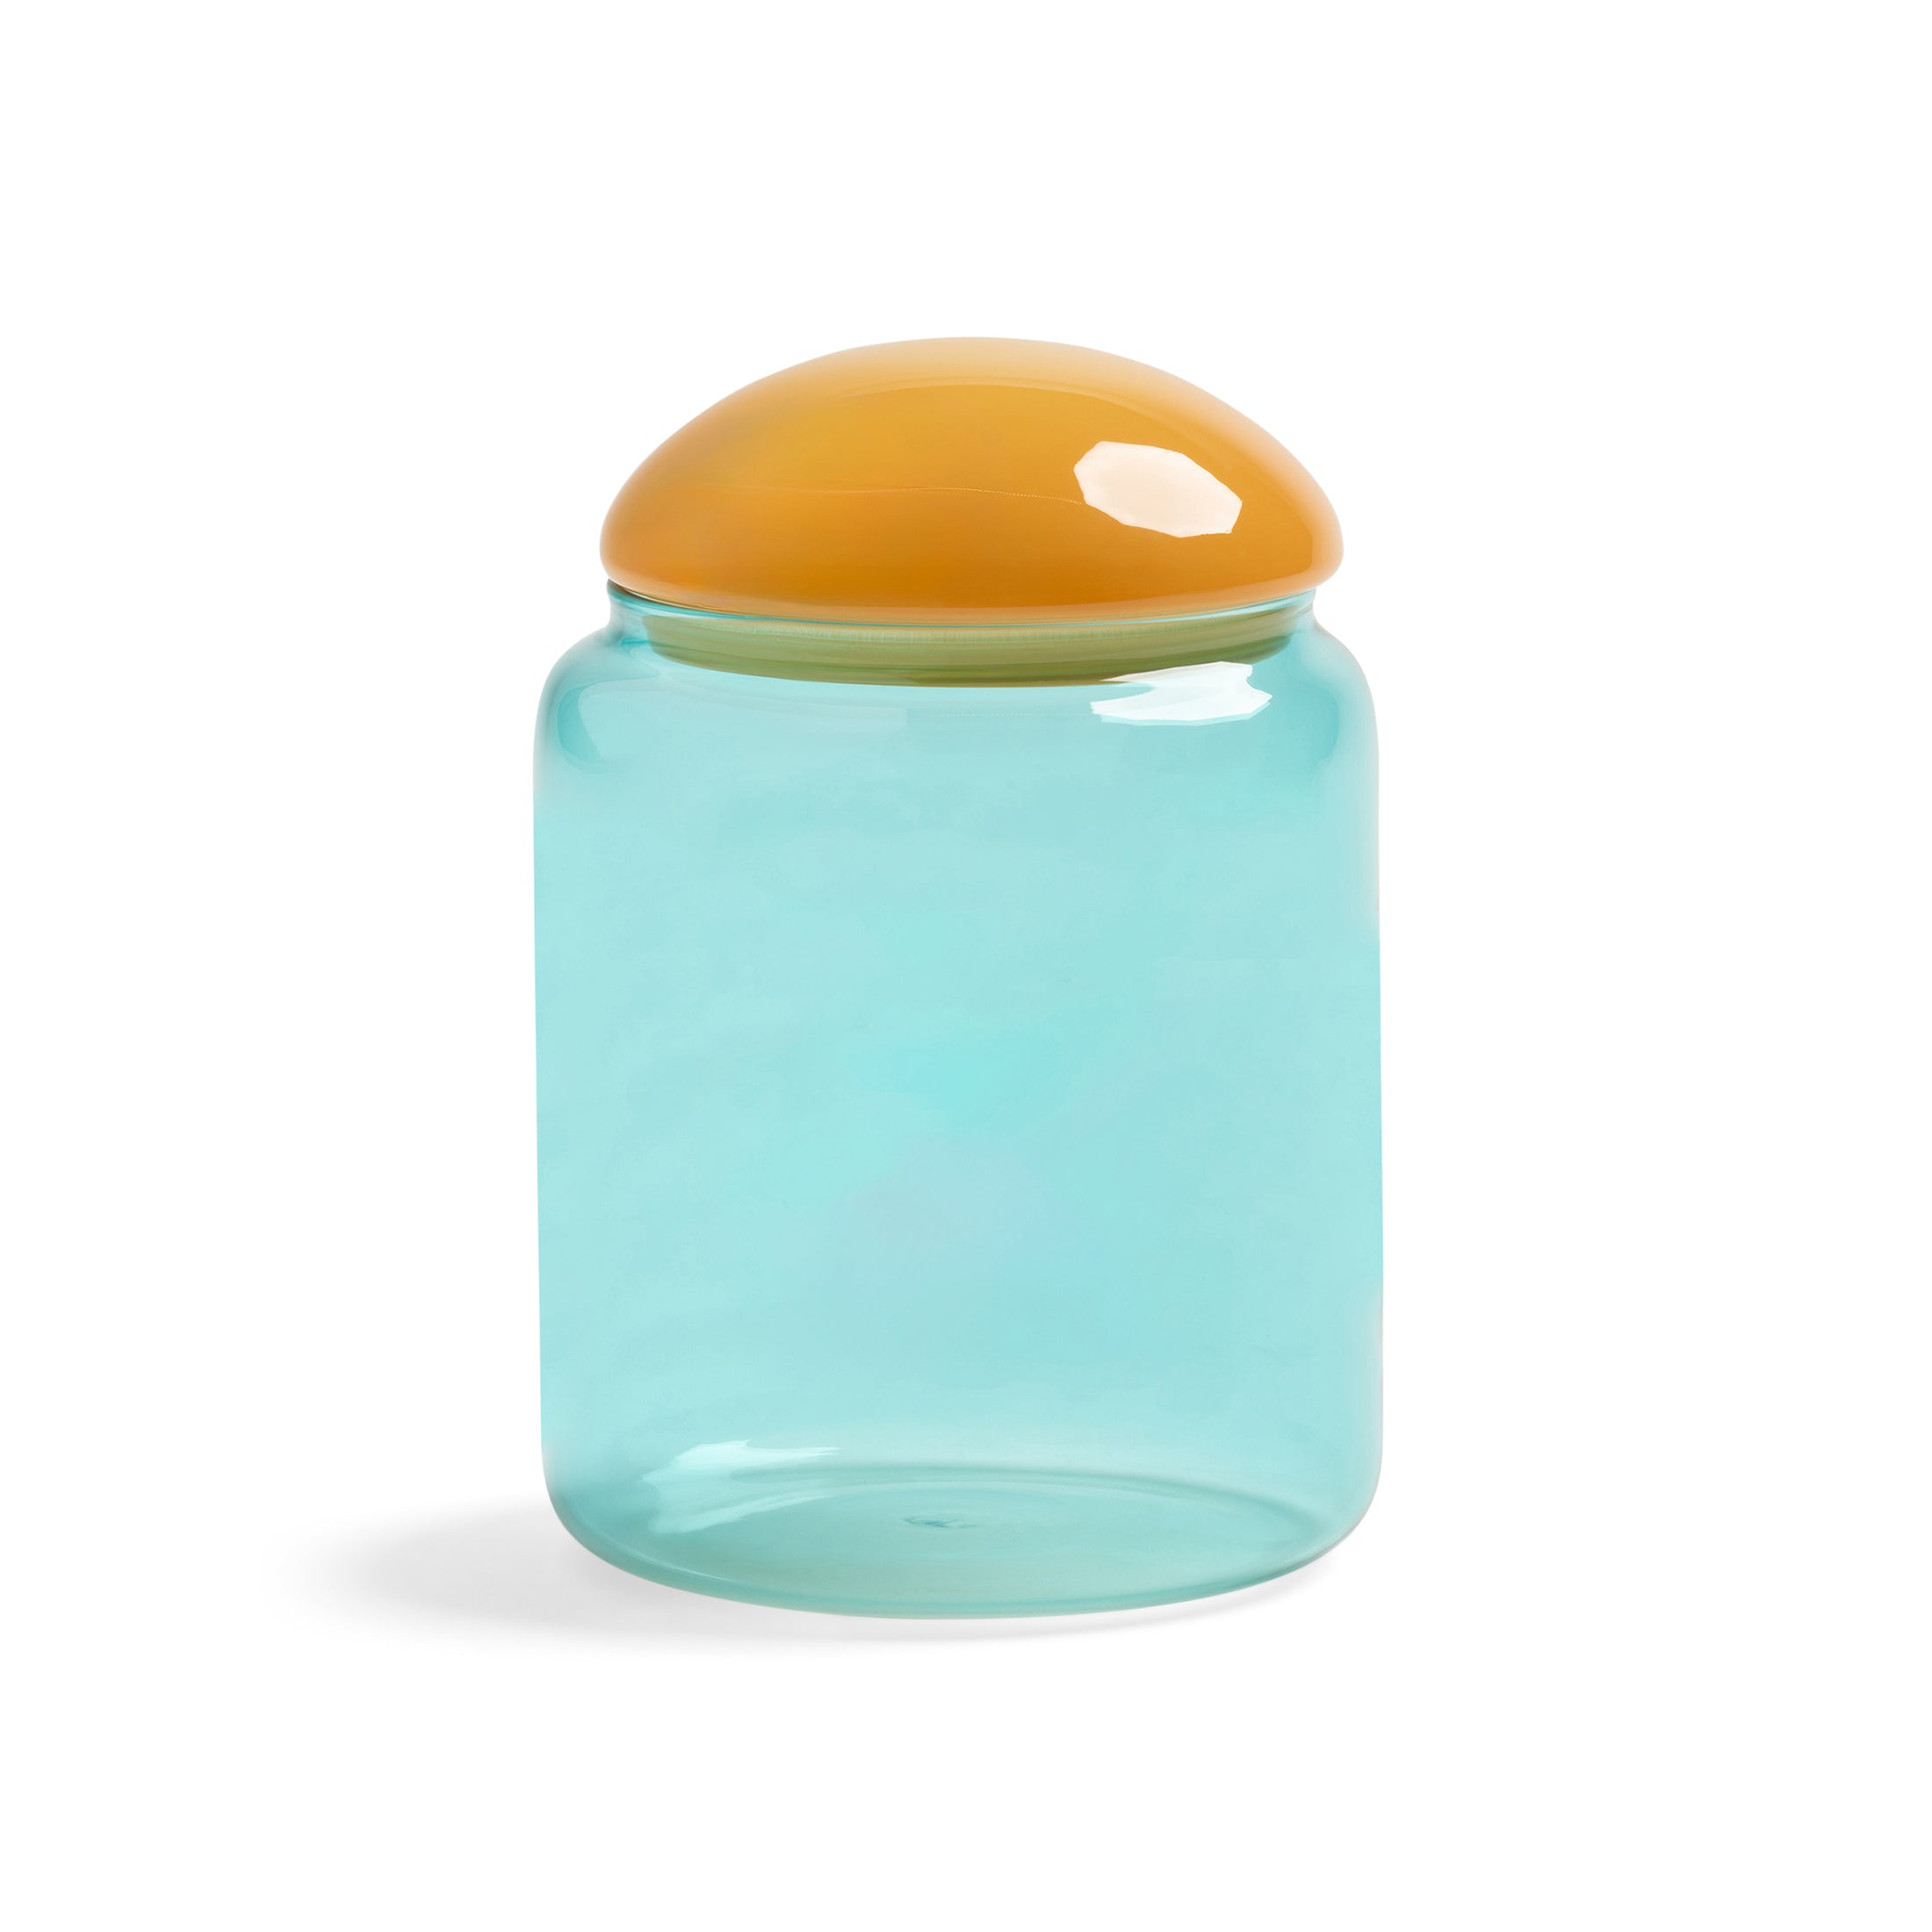 Herring & Bones - Concept Store Joyeux - &klevering - Pots - Pot en verre "Puffy"